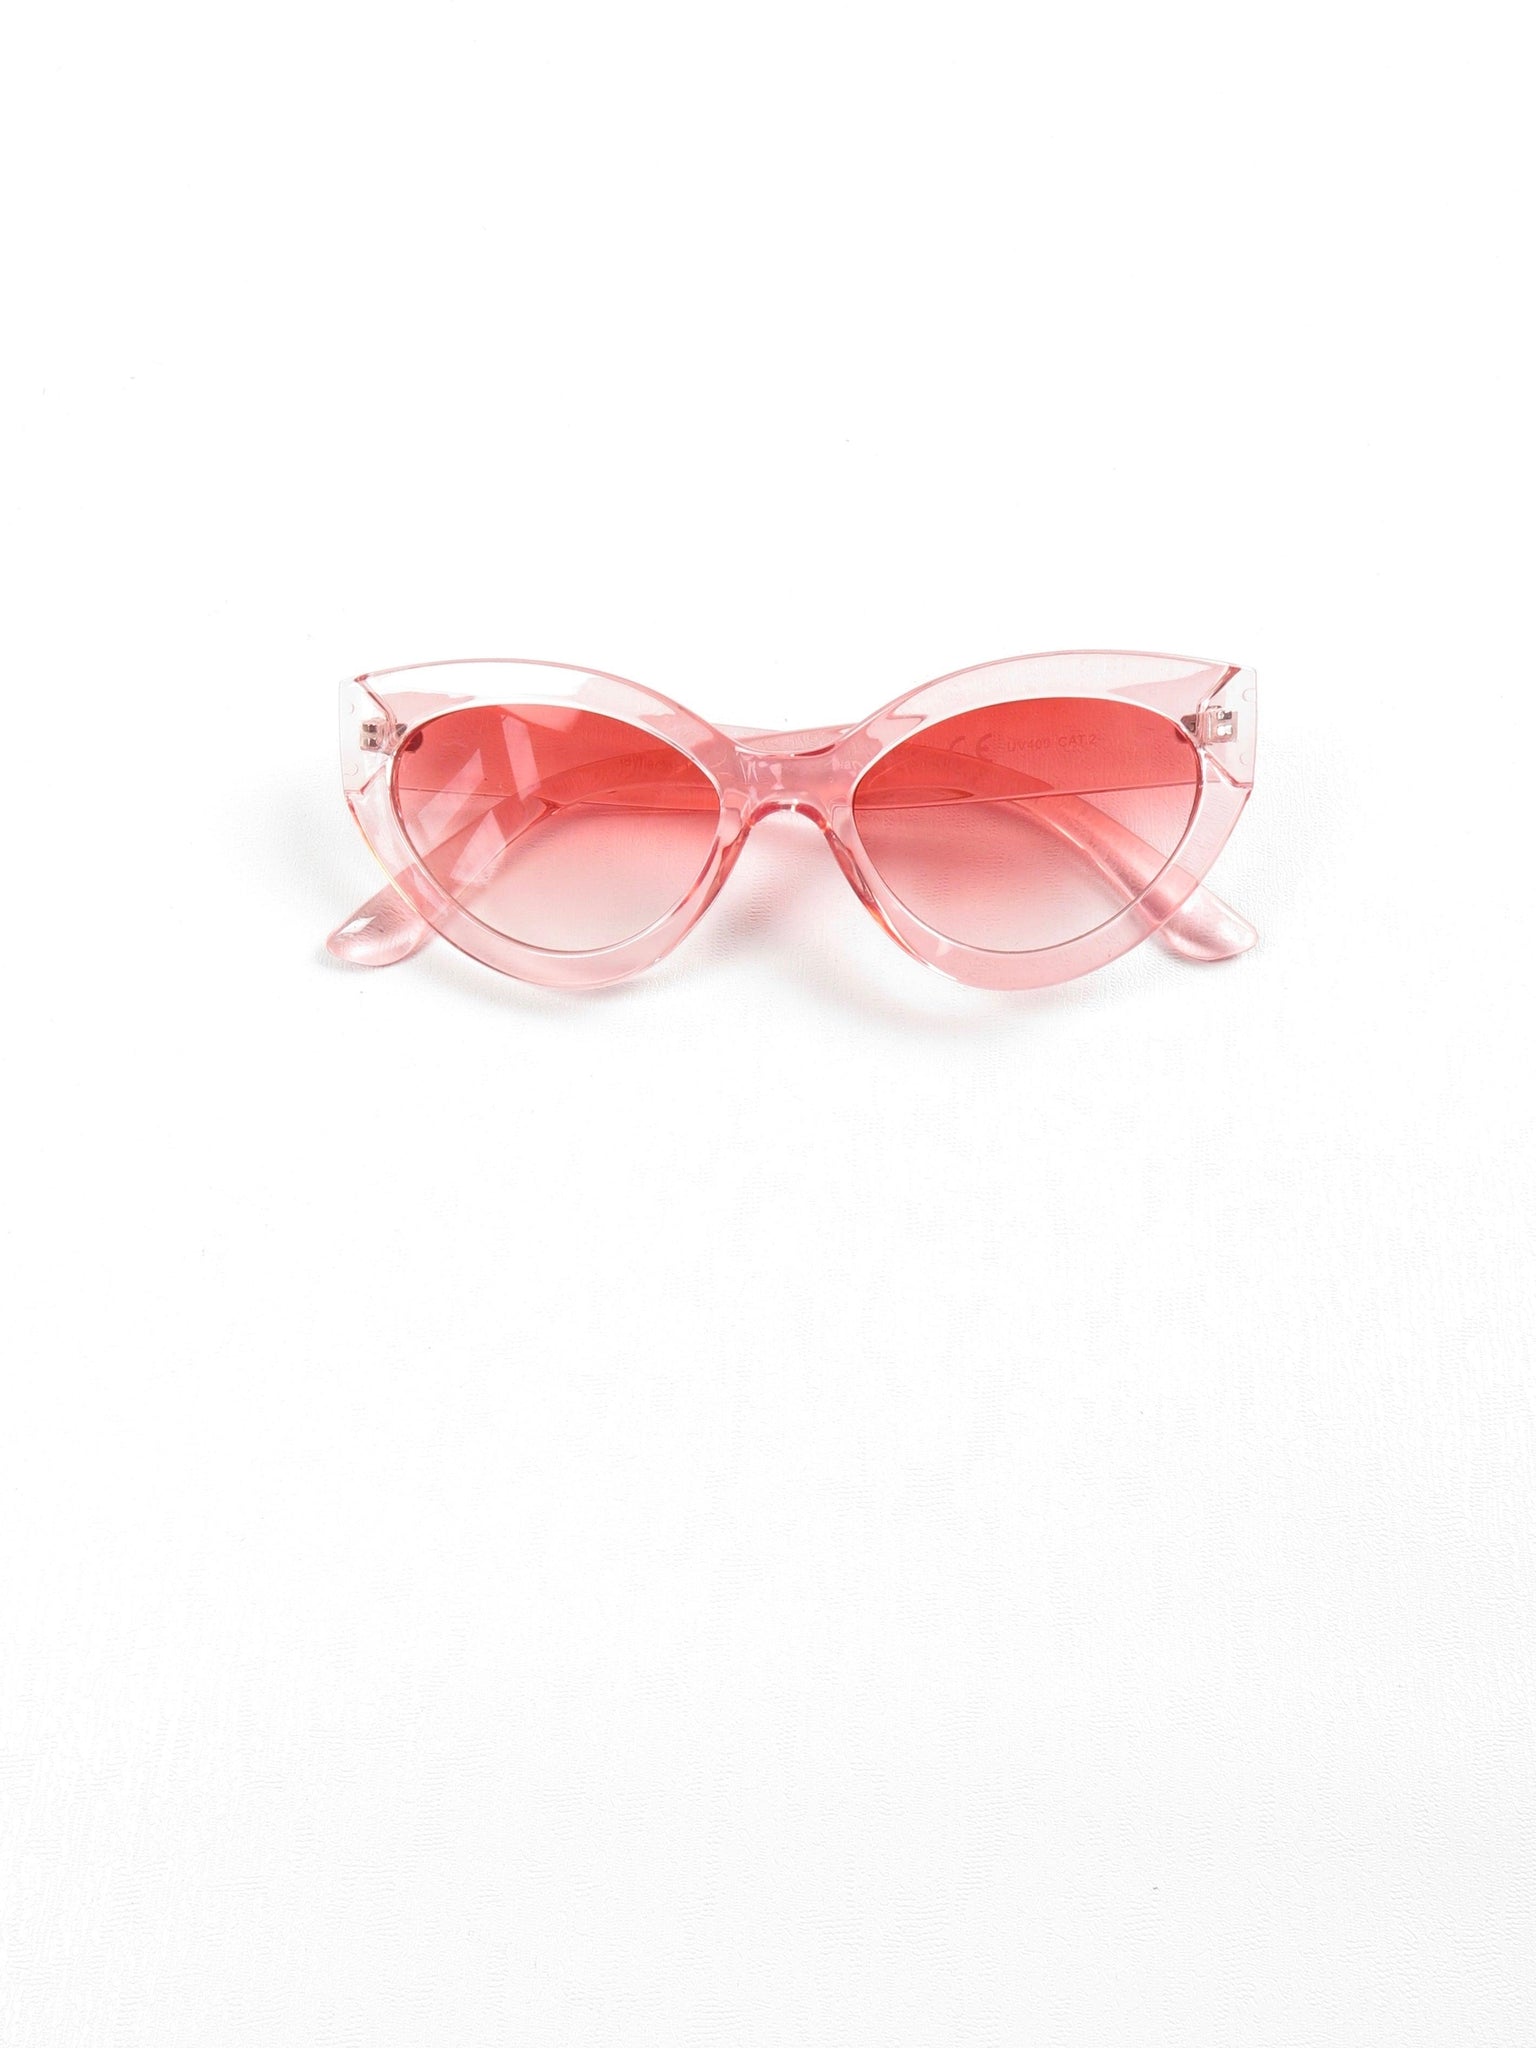 Edgy Cat Sunglasses - The Harlequin